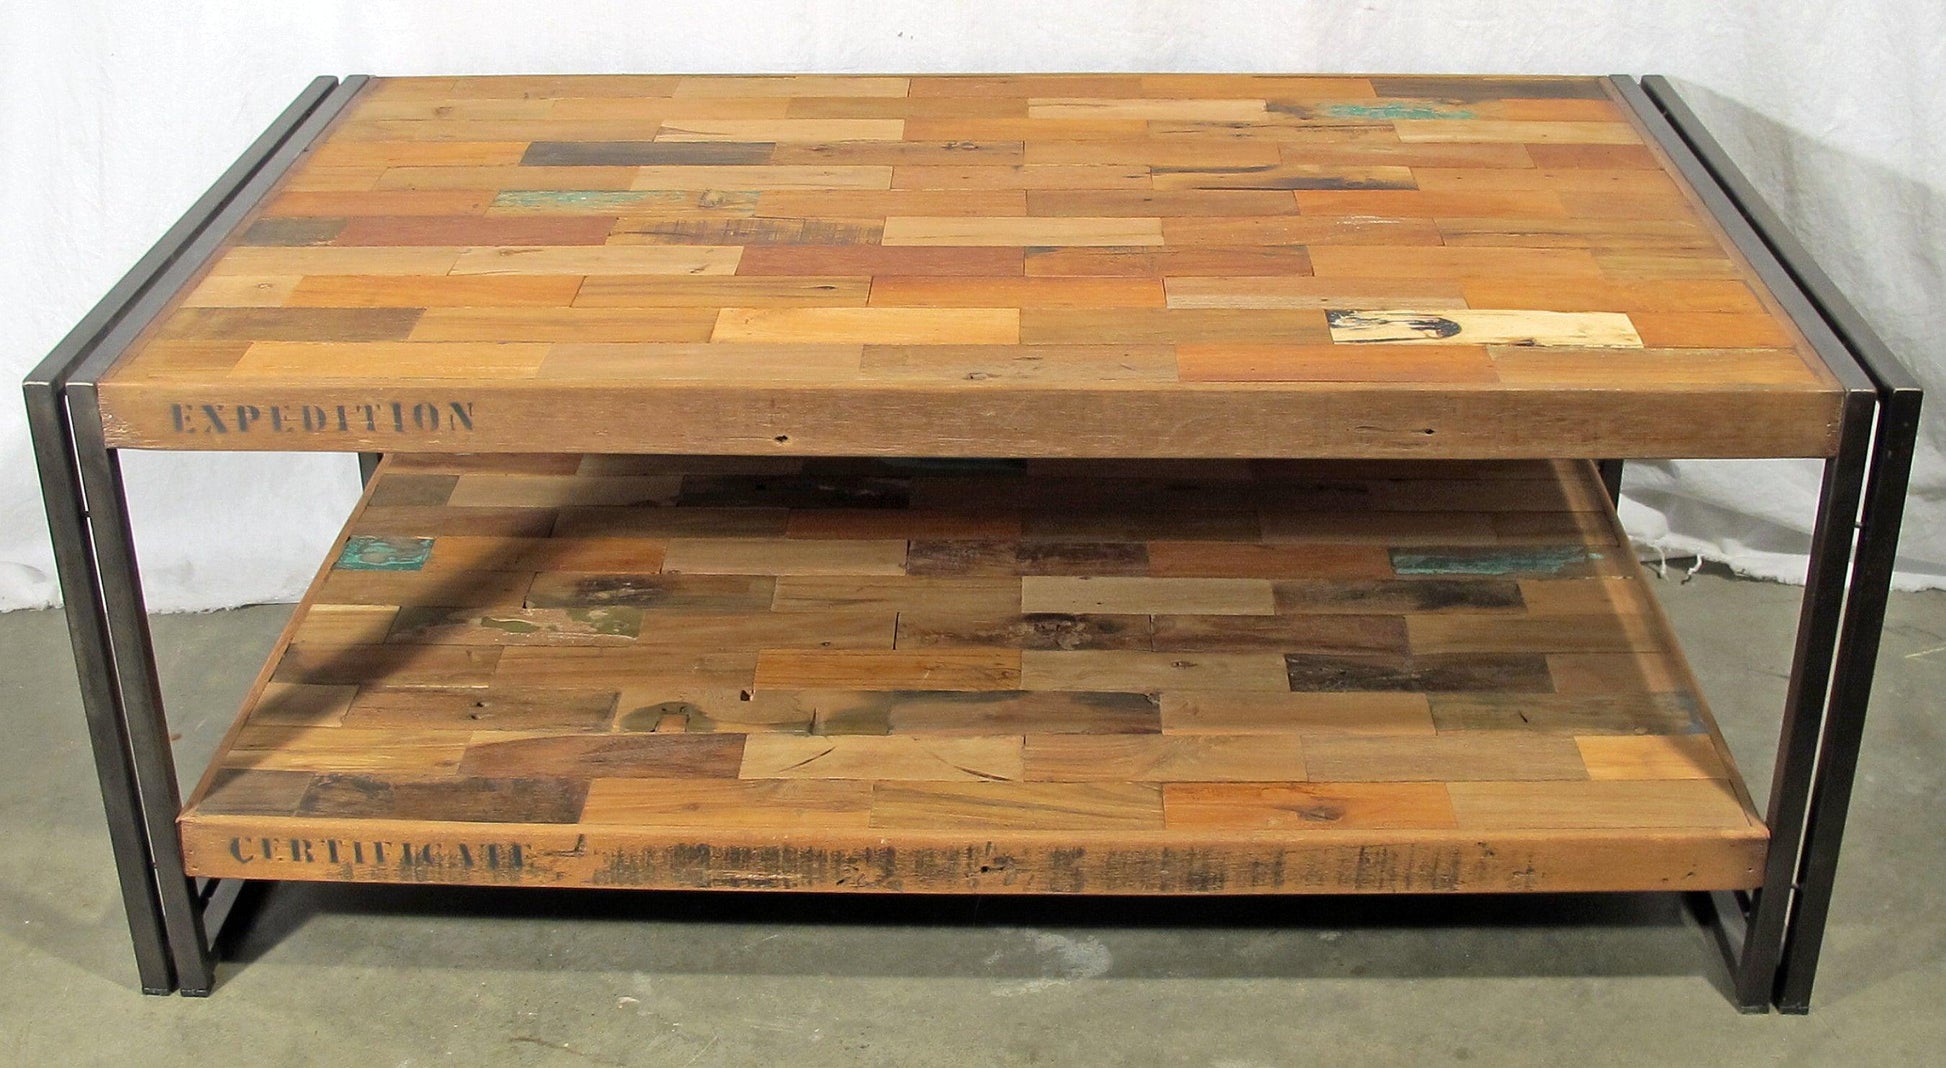 Boat Wood Coffee Table, 2 Shelf, Rectangular Shape - SAMUDRA Collection - Impact Imports